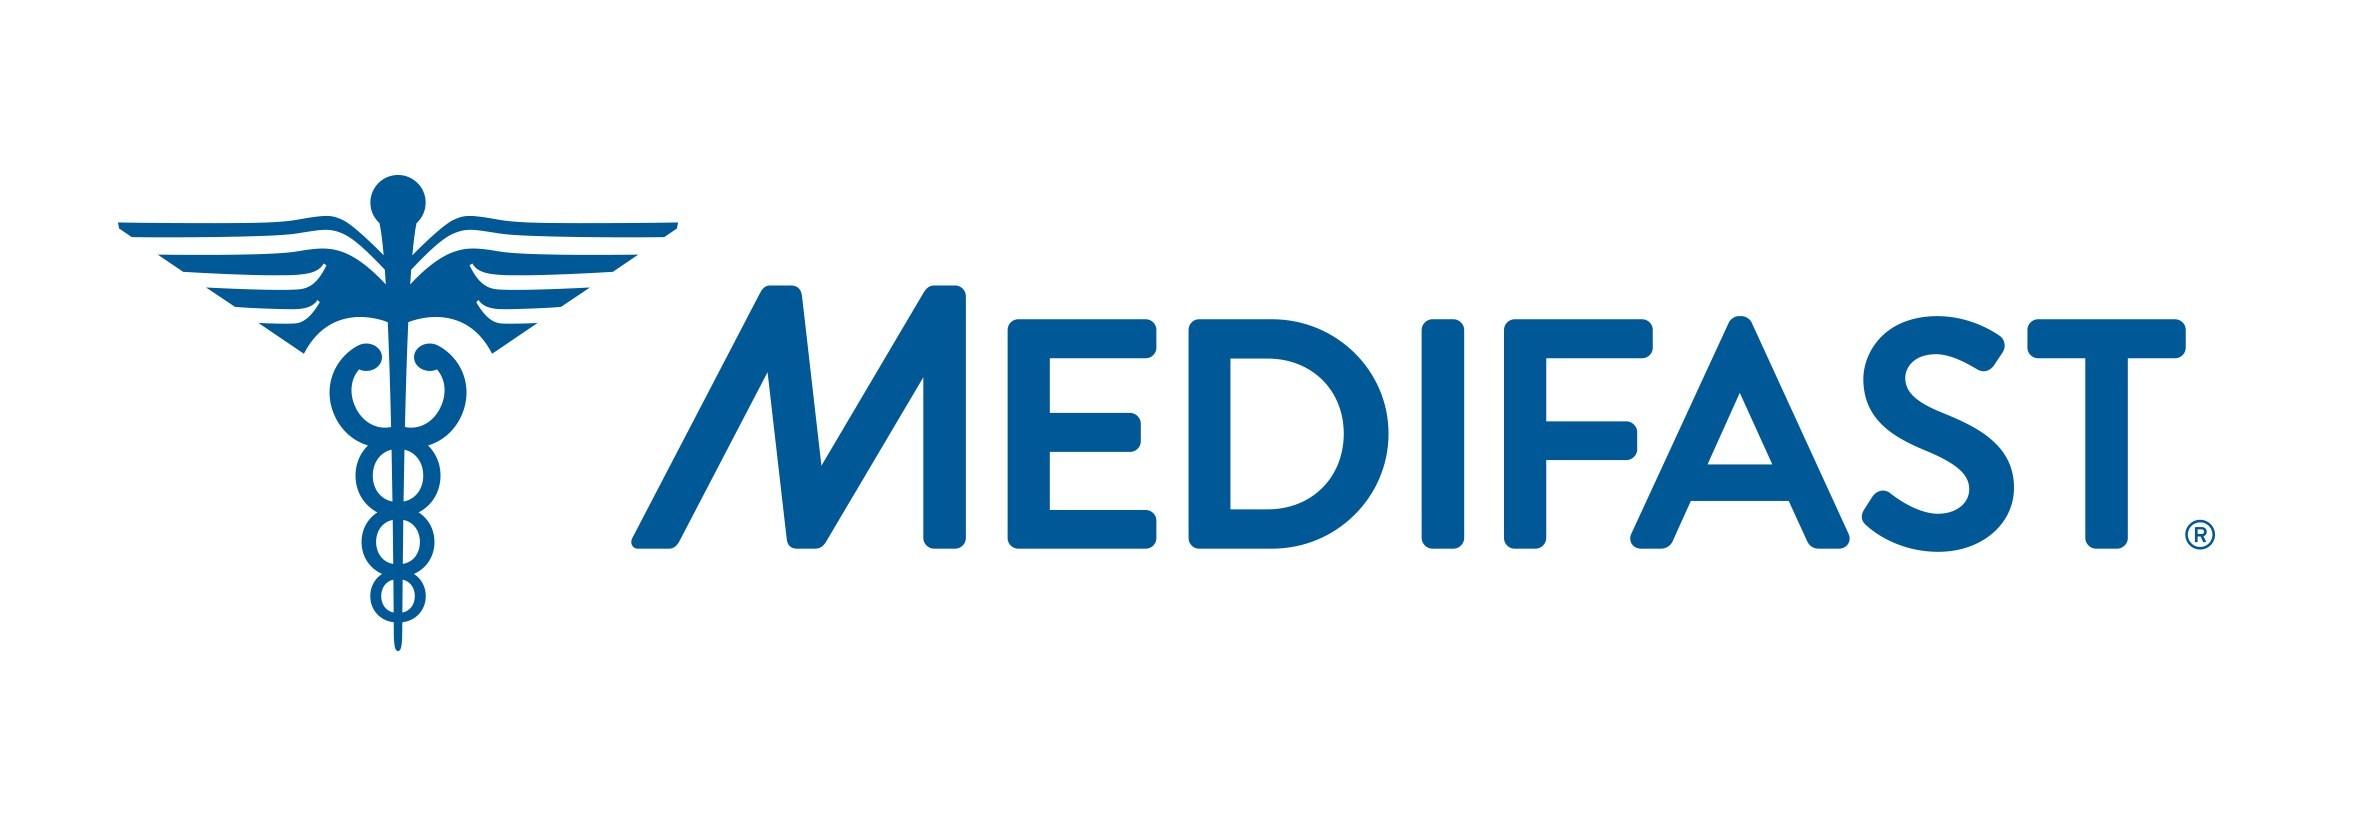 Medifast Adopts Limited Duration Stockholder Rights Plan